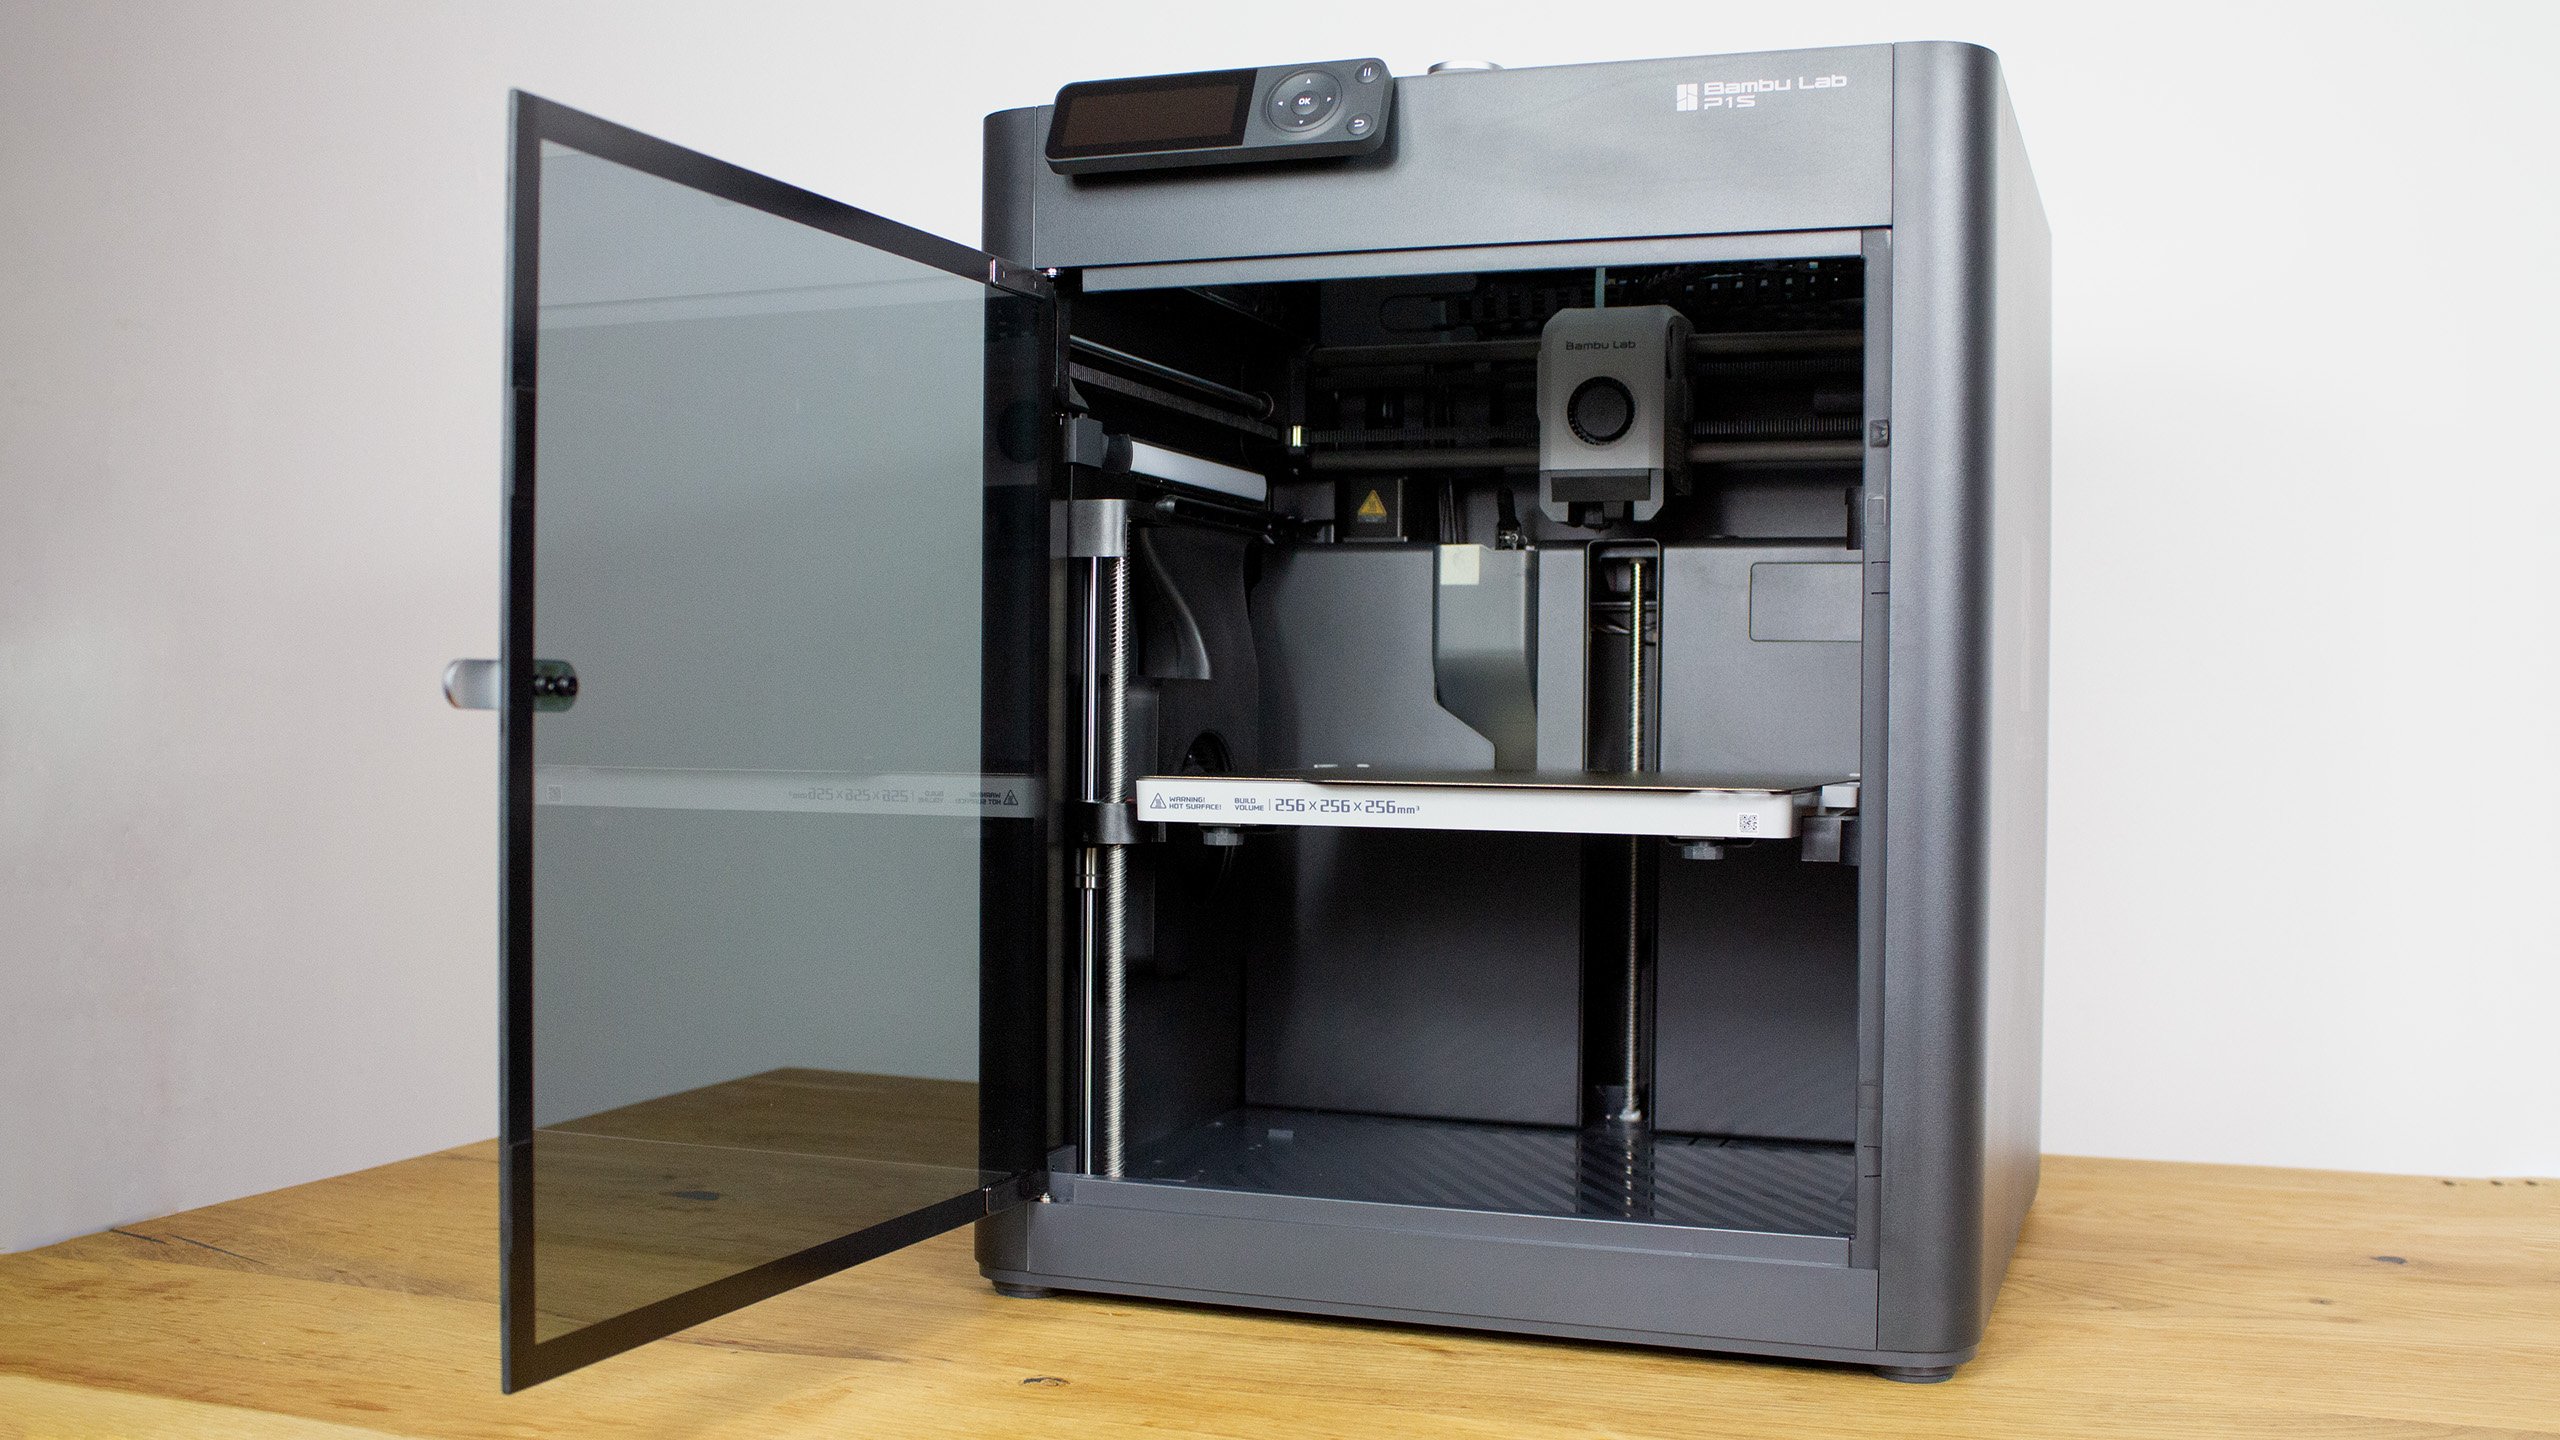 Bambu Lab P1S Combo Review: AMS and 3D Printer Testing